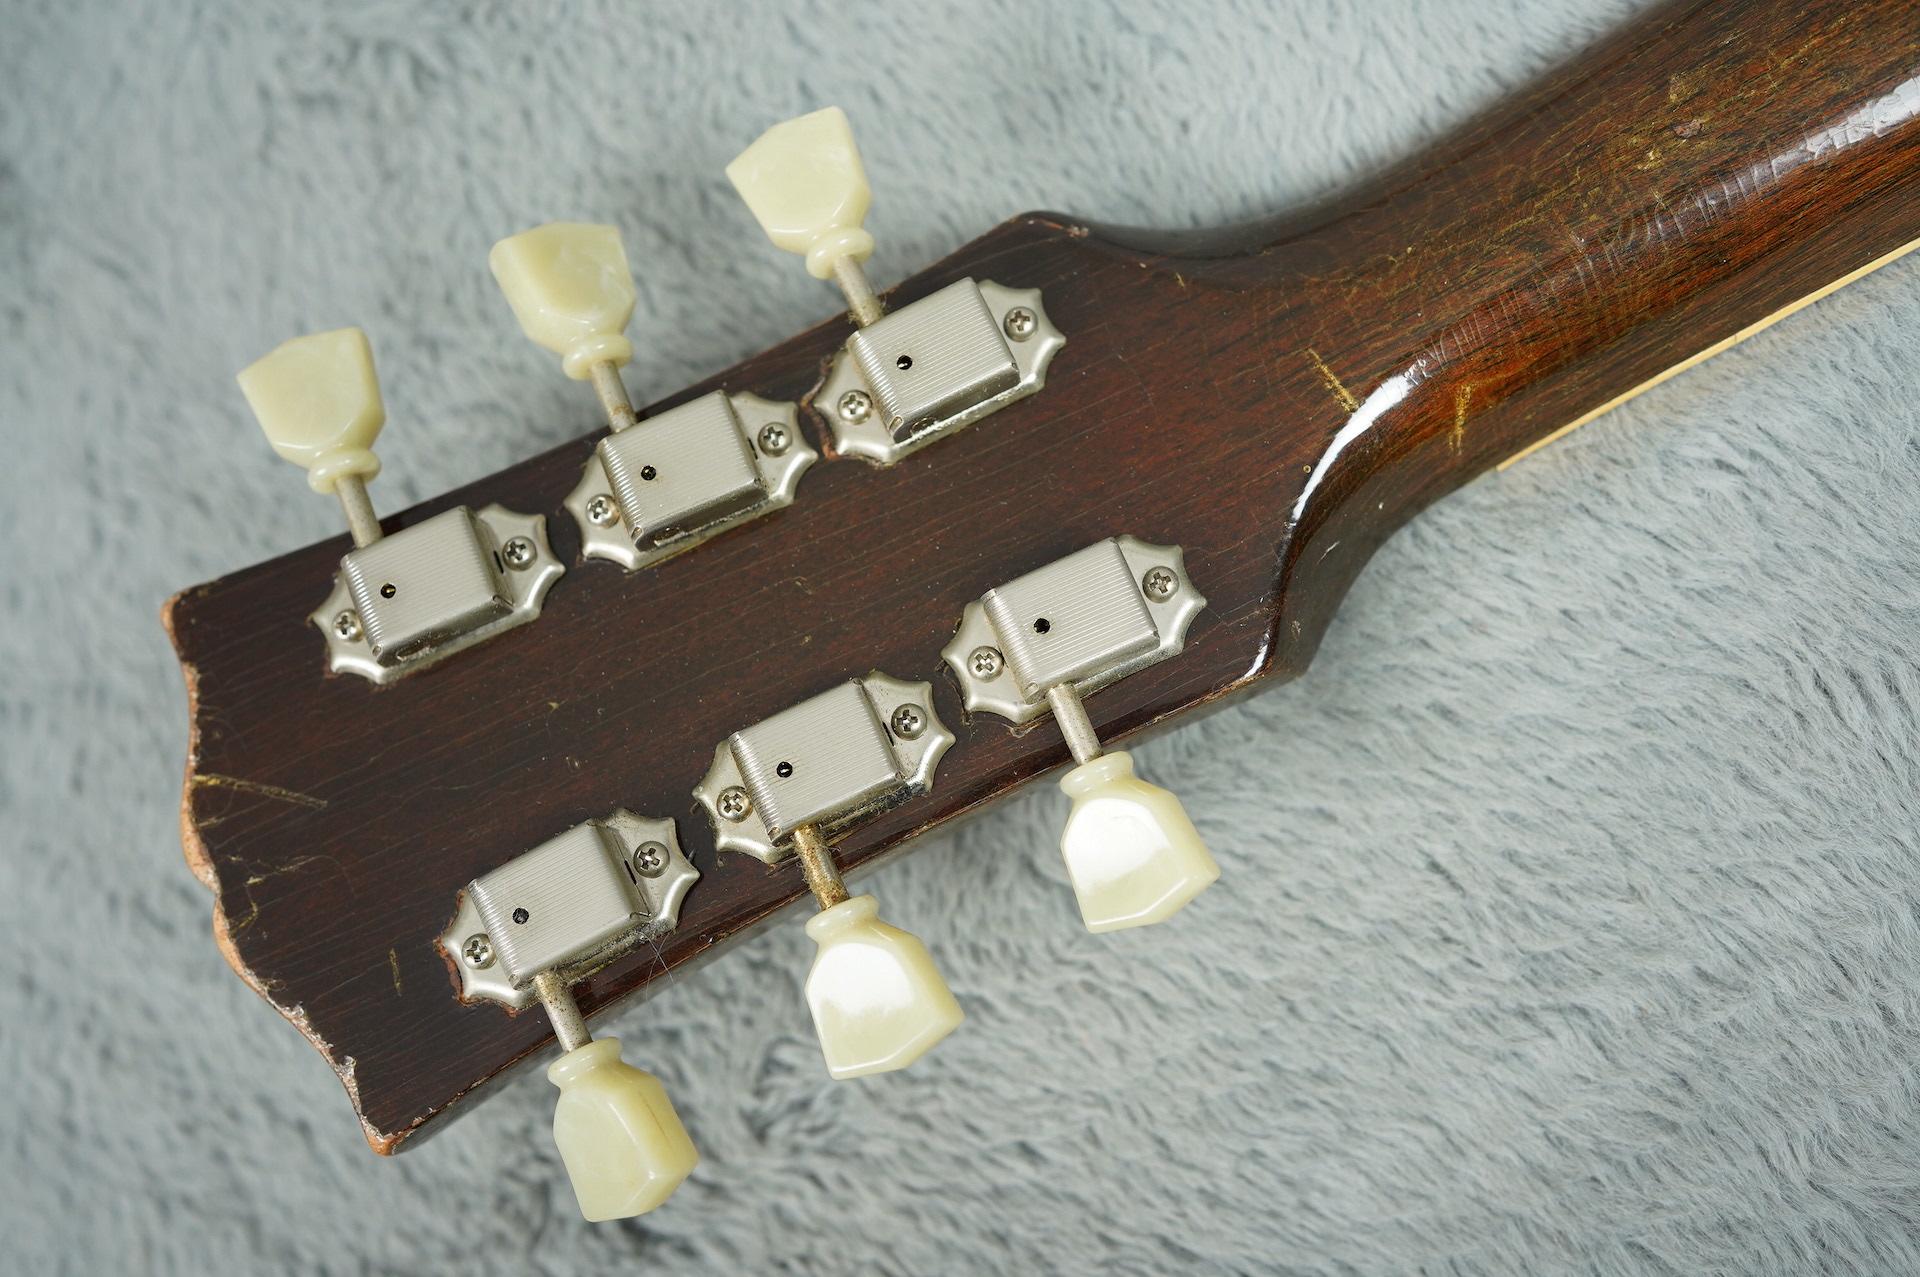 1952 Gibson ES-175D